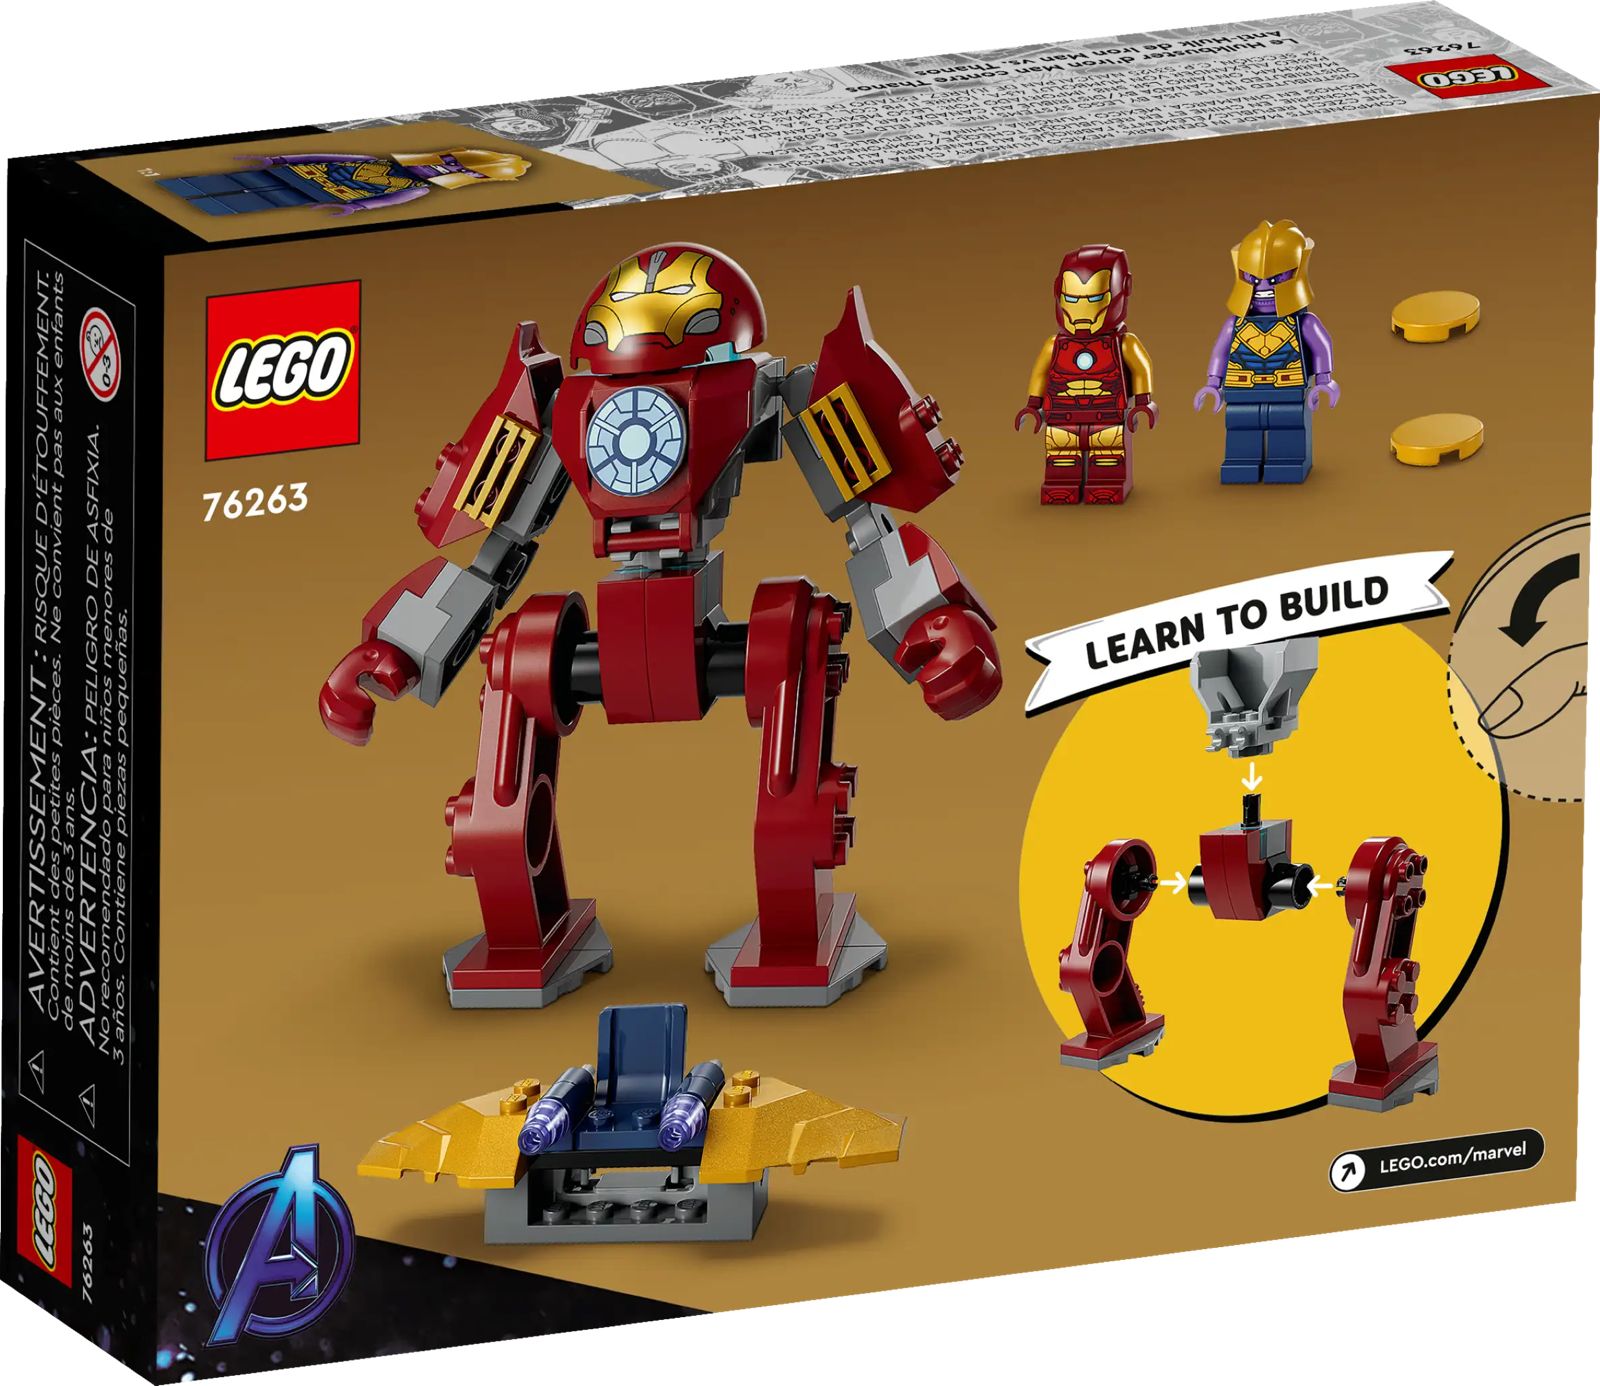 Lego Marvel Hulkbuster De Iron Man Vs Thanos 76263